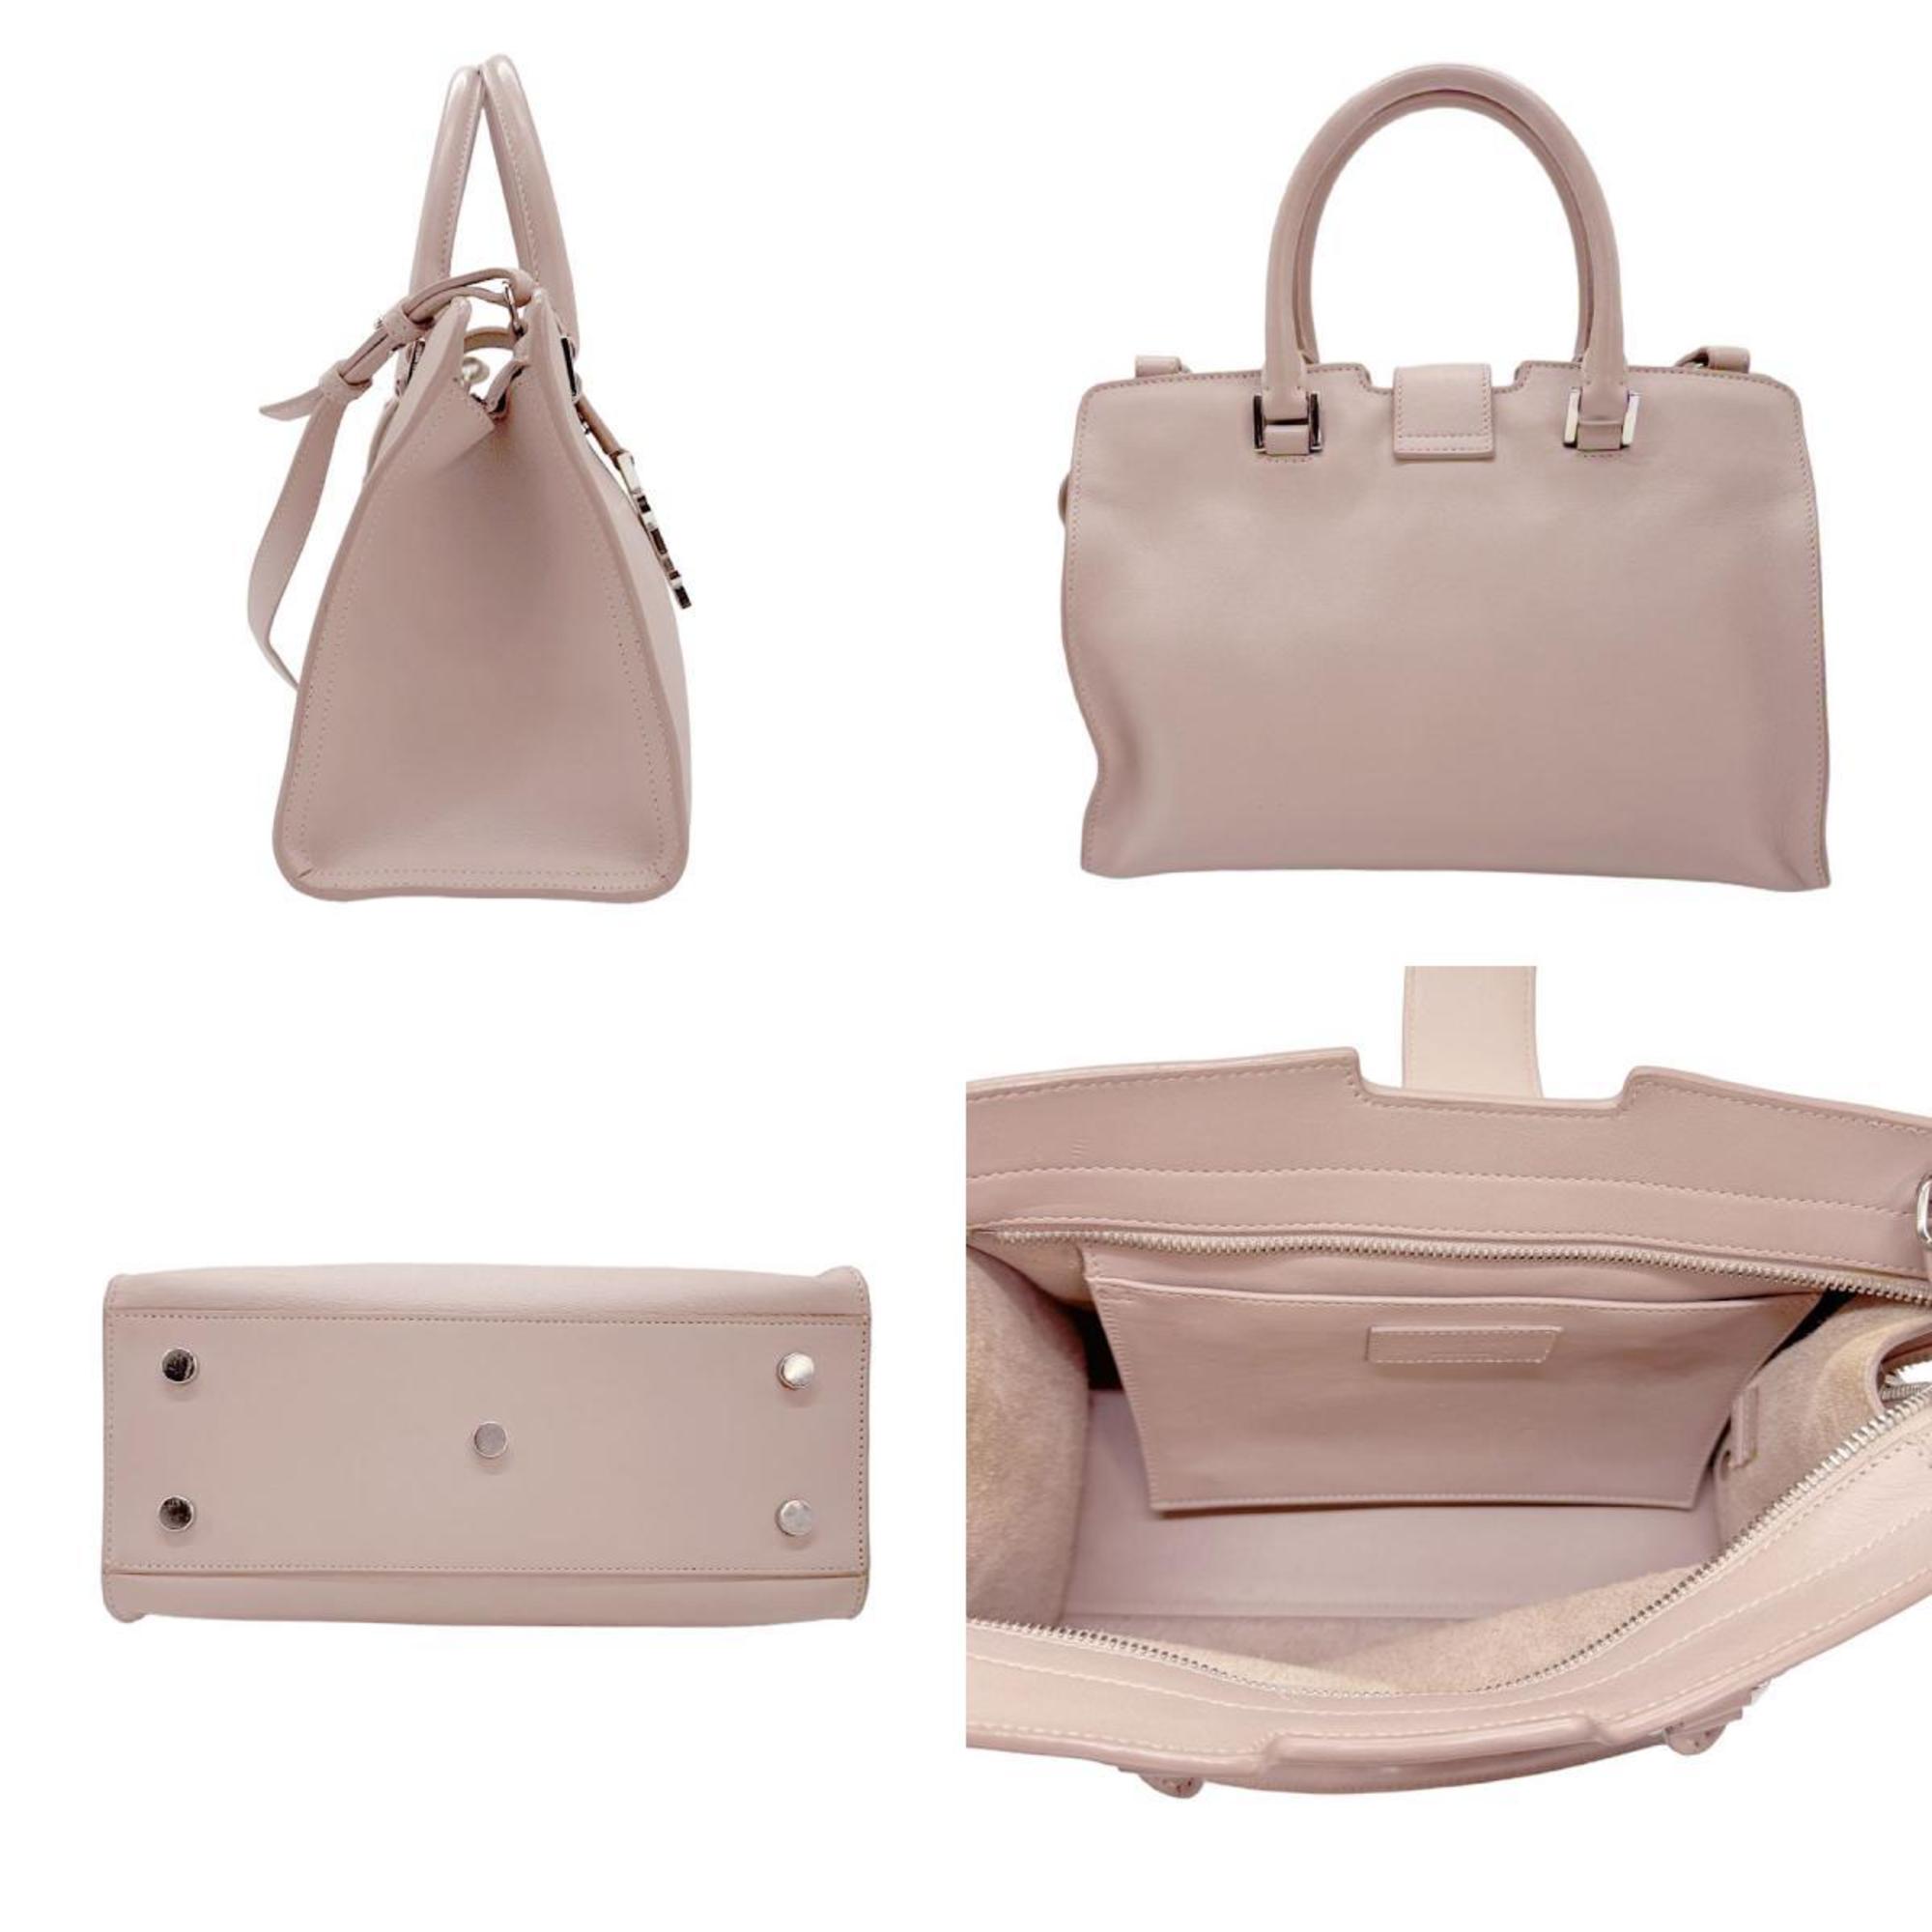 Saint Laurent SAINT LAURENT Handbag Shoulder Bag Baby Cabas Leather Light Pink Women's 424868 z0780